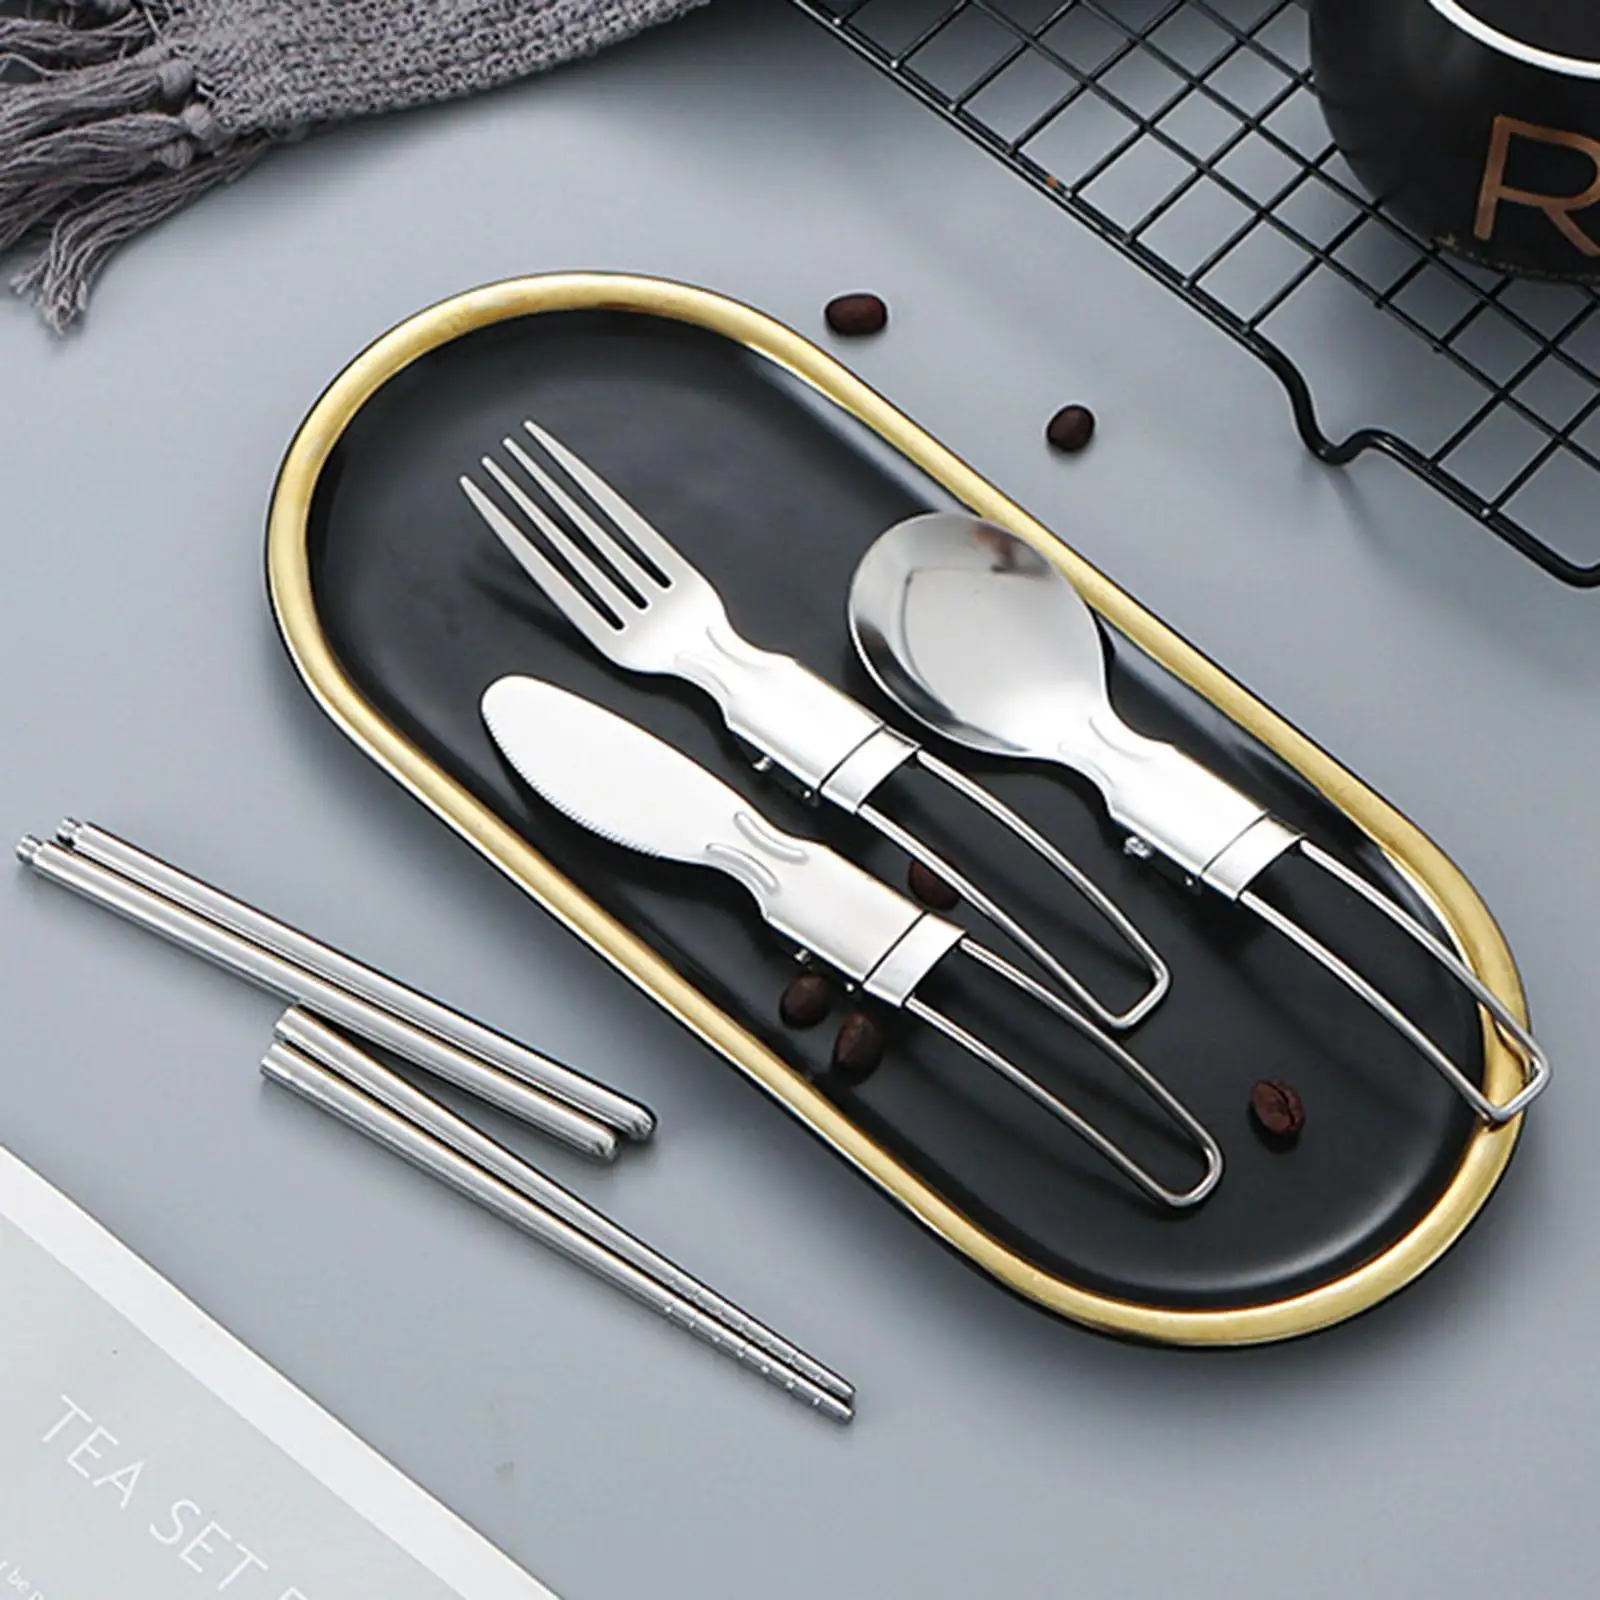 5Pcs/Set Outdoor Tablewares Kit Spork Fork Knives Chopsticks Camping Cutlery Travel Flatware for Camping BBQ Picnic